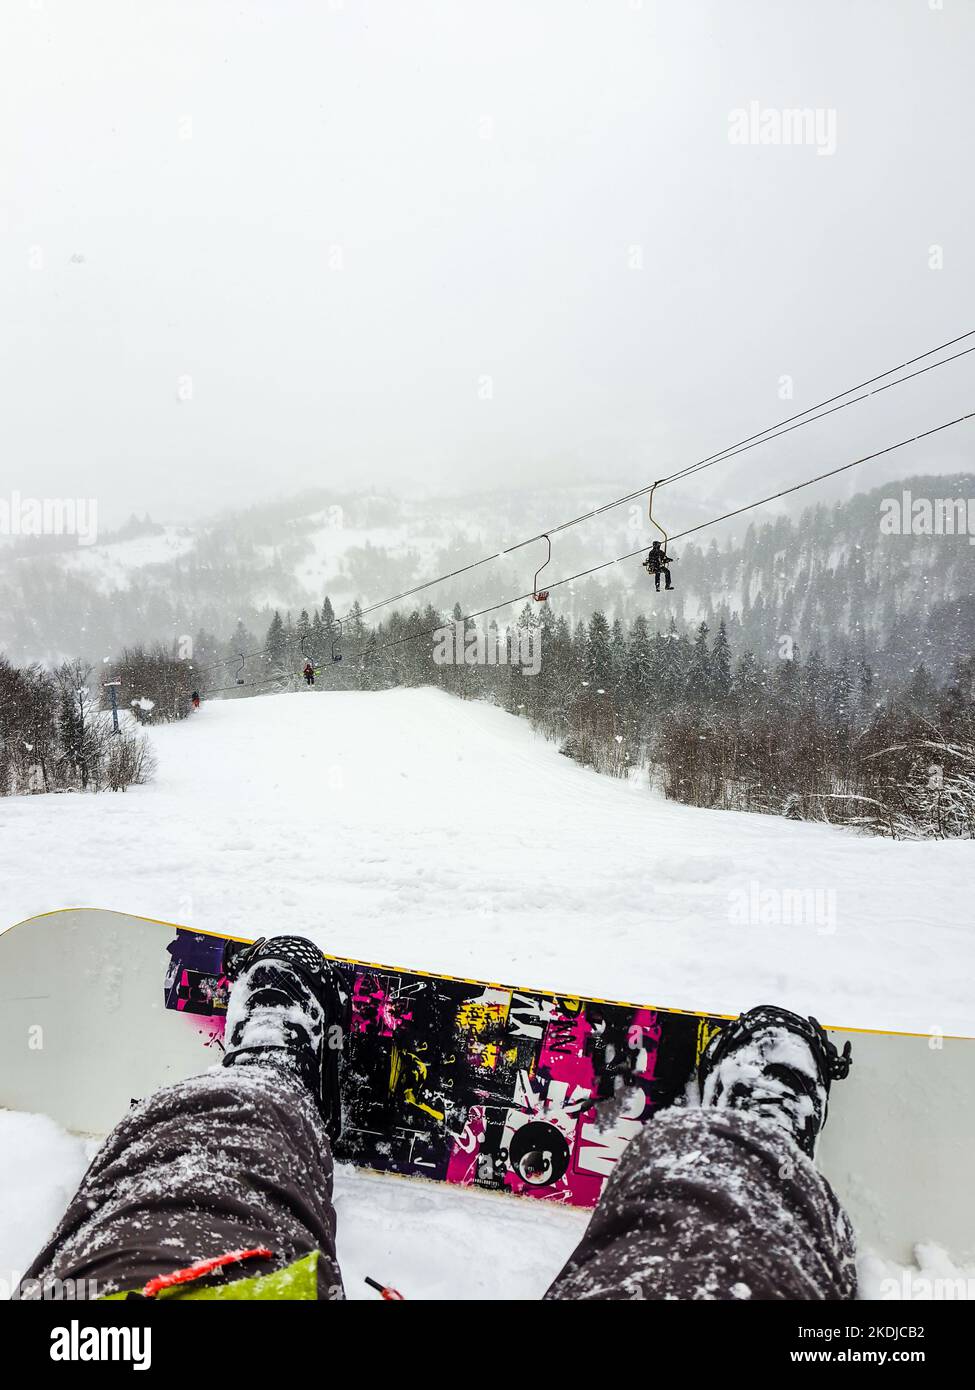 snowboarder sitting on the ski slope Stock Photo